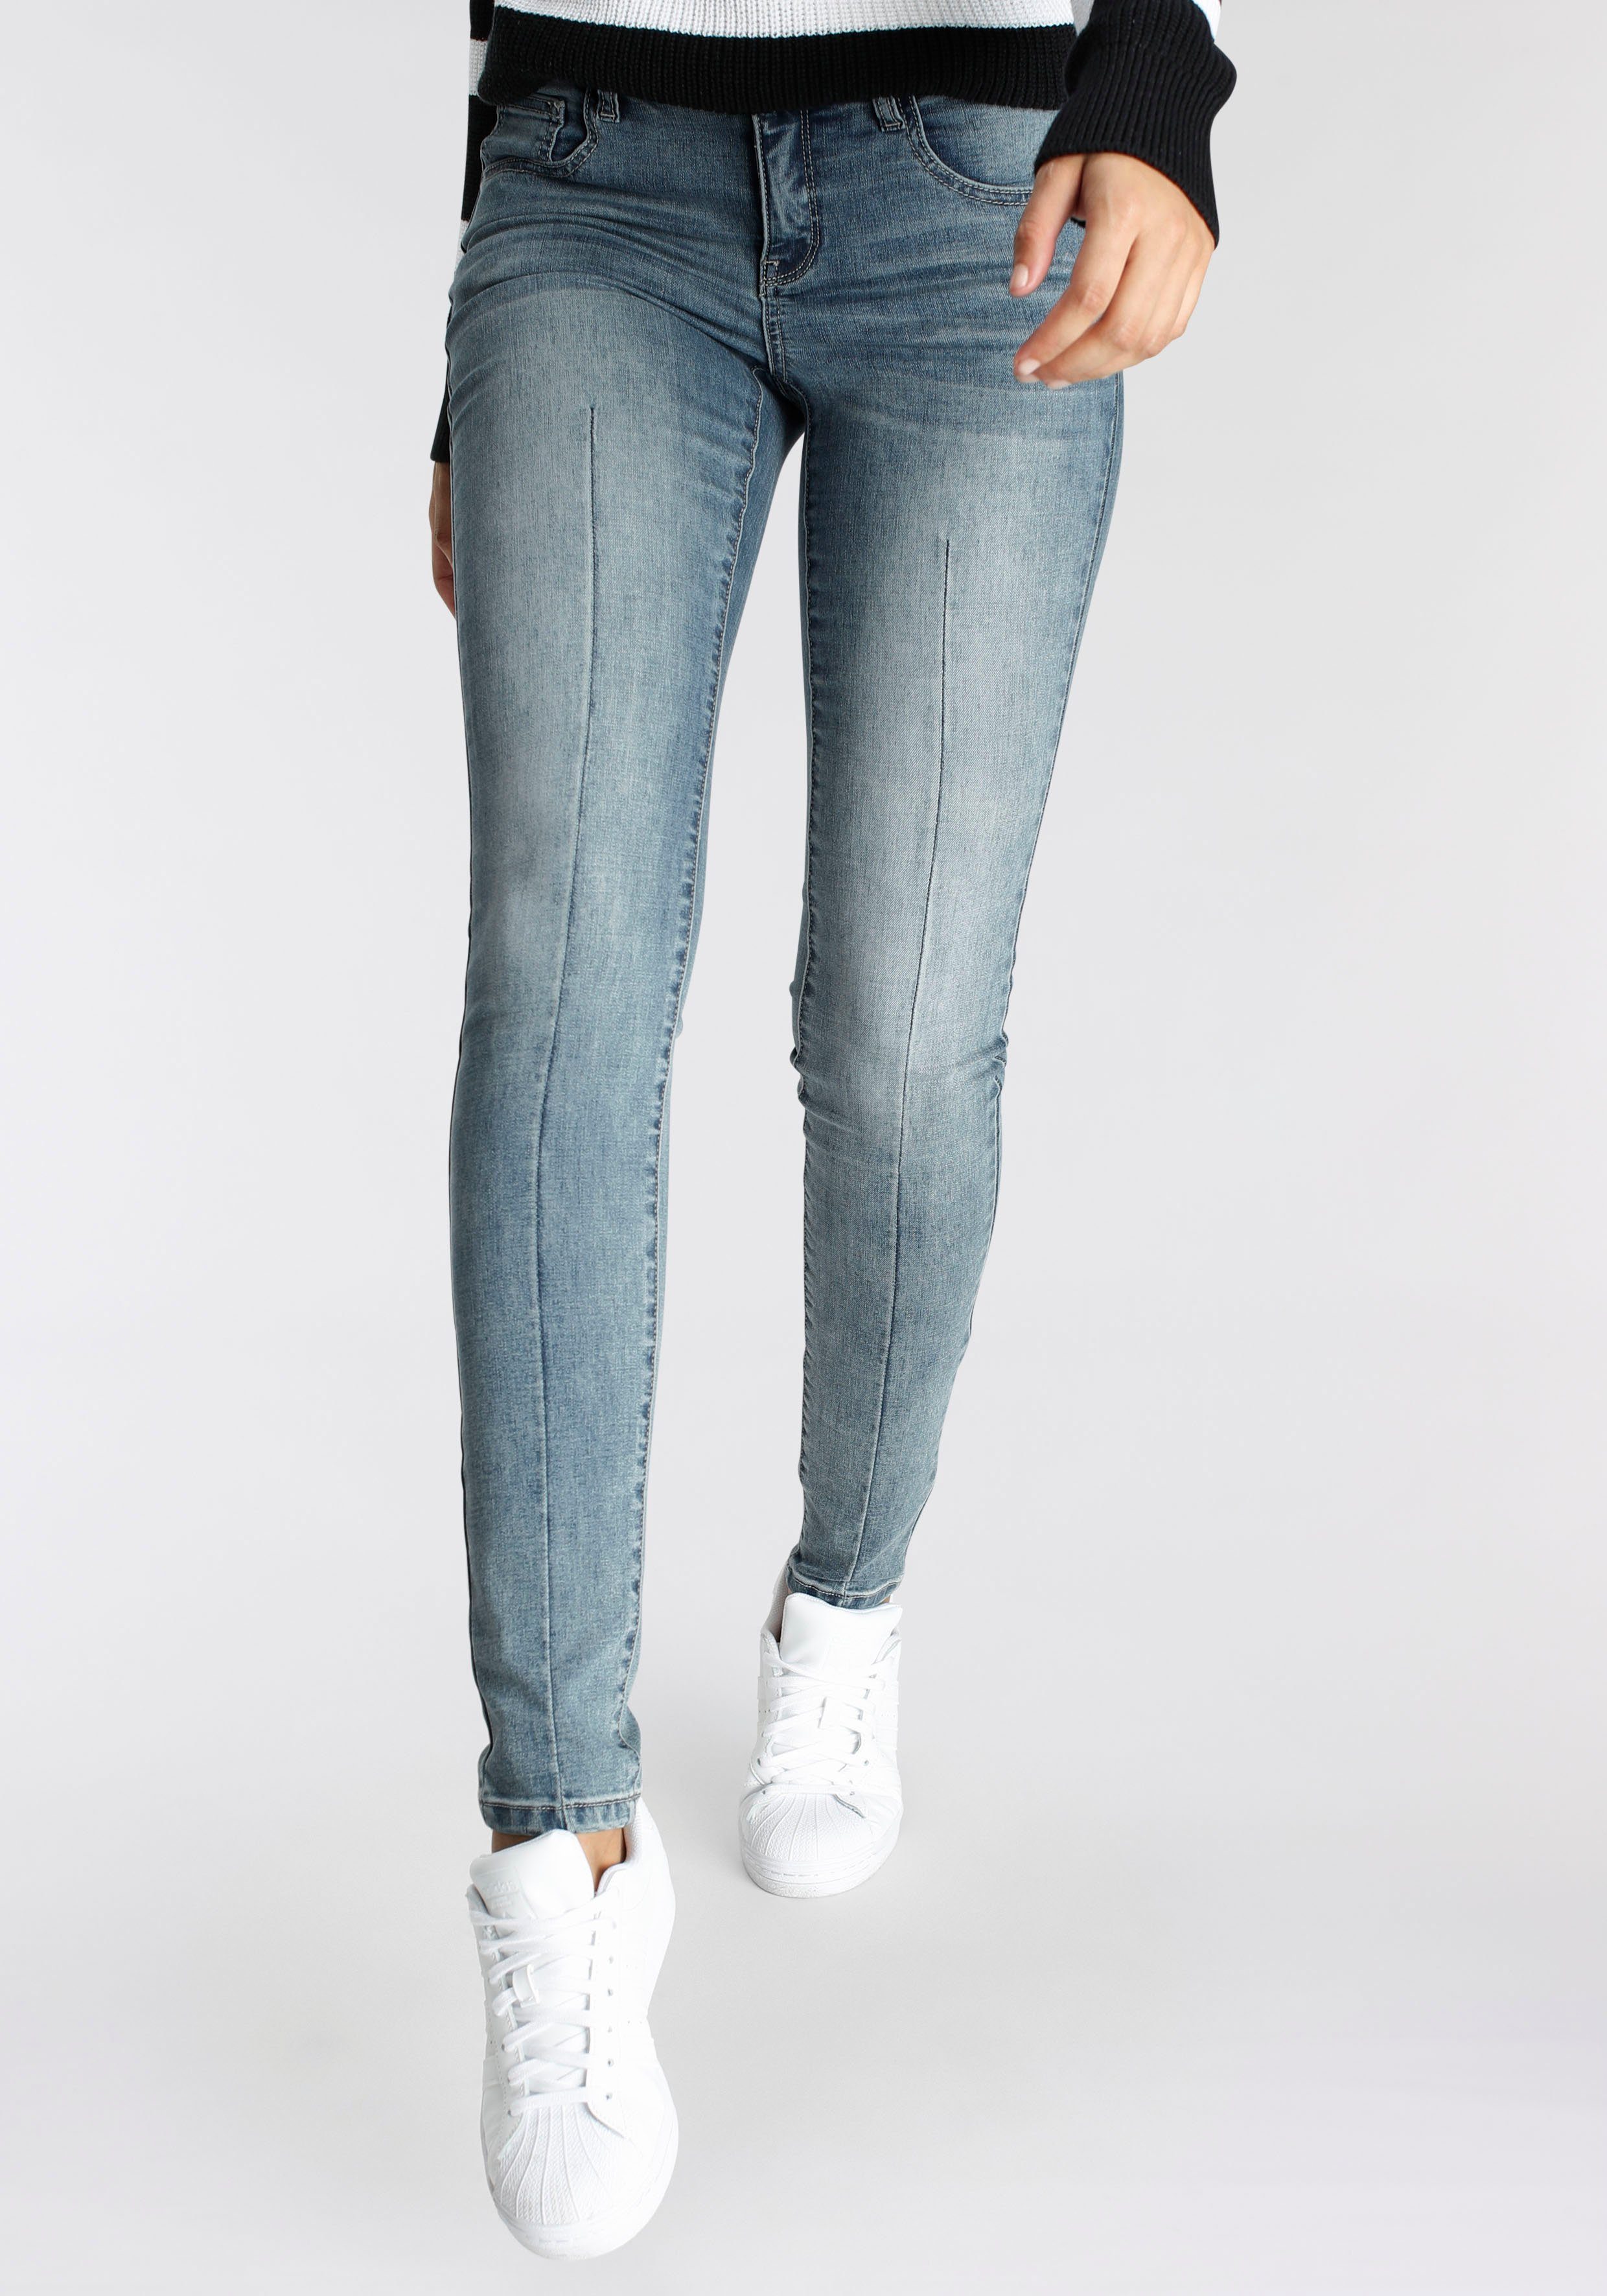 Arizona Skinny-fit-Jeans Ultra-Stretch, sehr high zu figurbetont Waist Leibhöhe Mid Denim performance normale stretch bequem, gut kombinieren